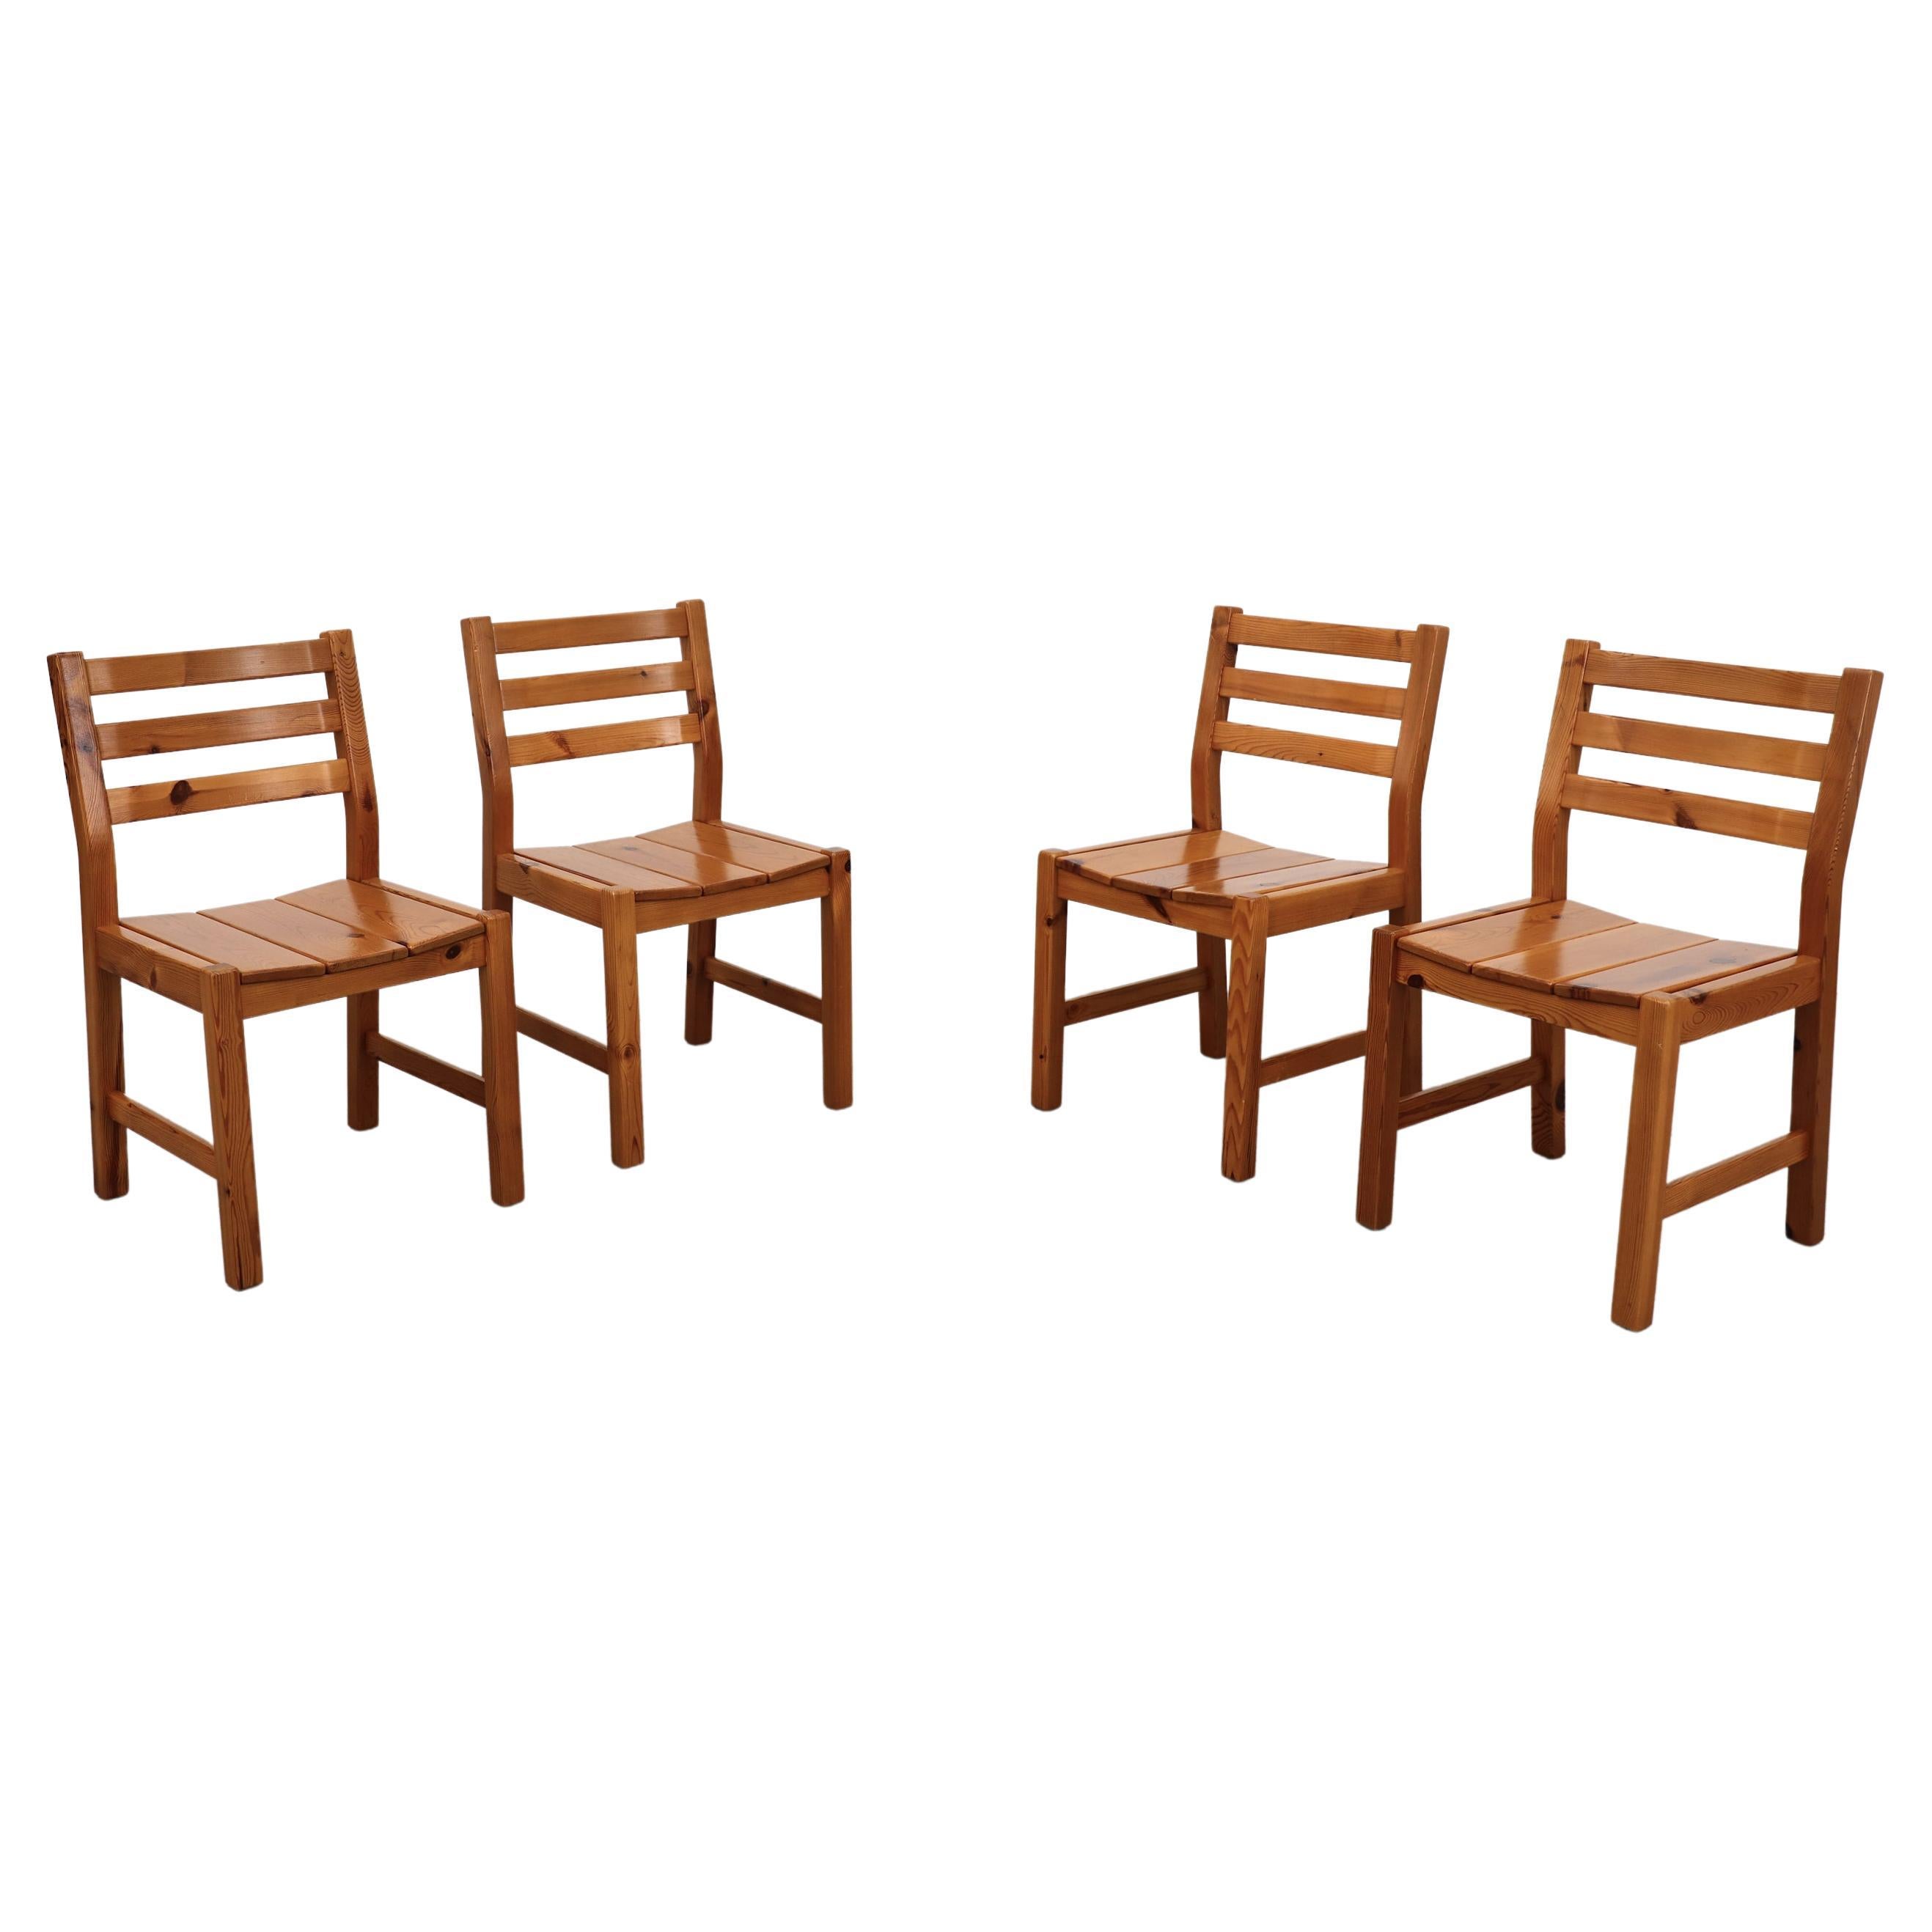 Set of 4 Ate van Apeldoorn Style Ladder Back, Slatted 1970's Pine Dining Chairs